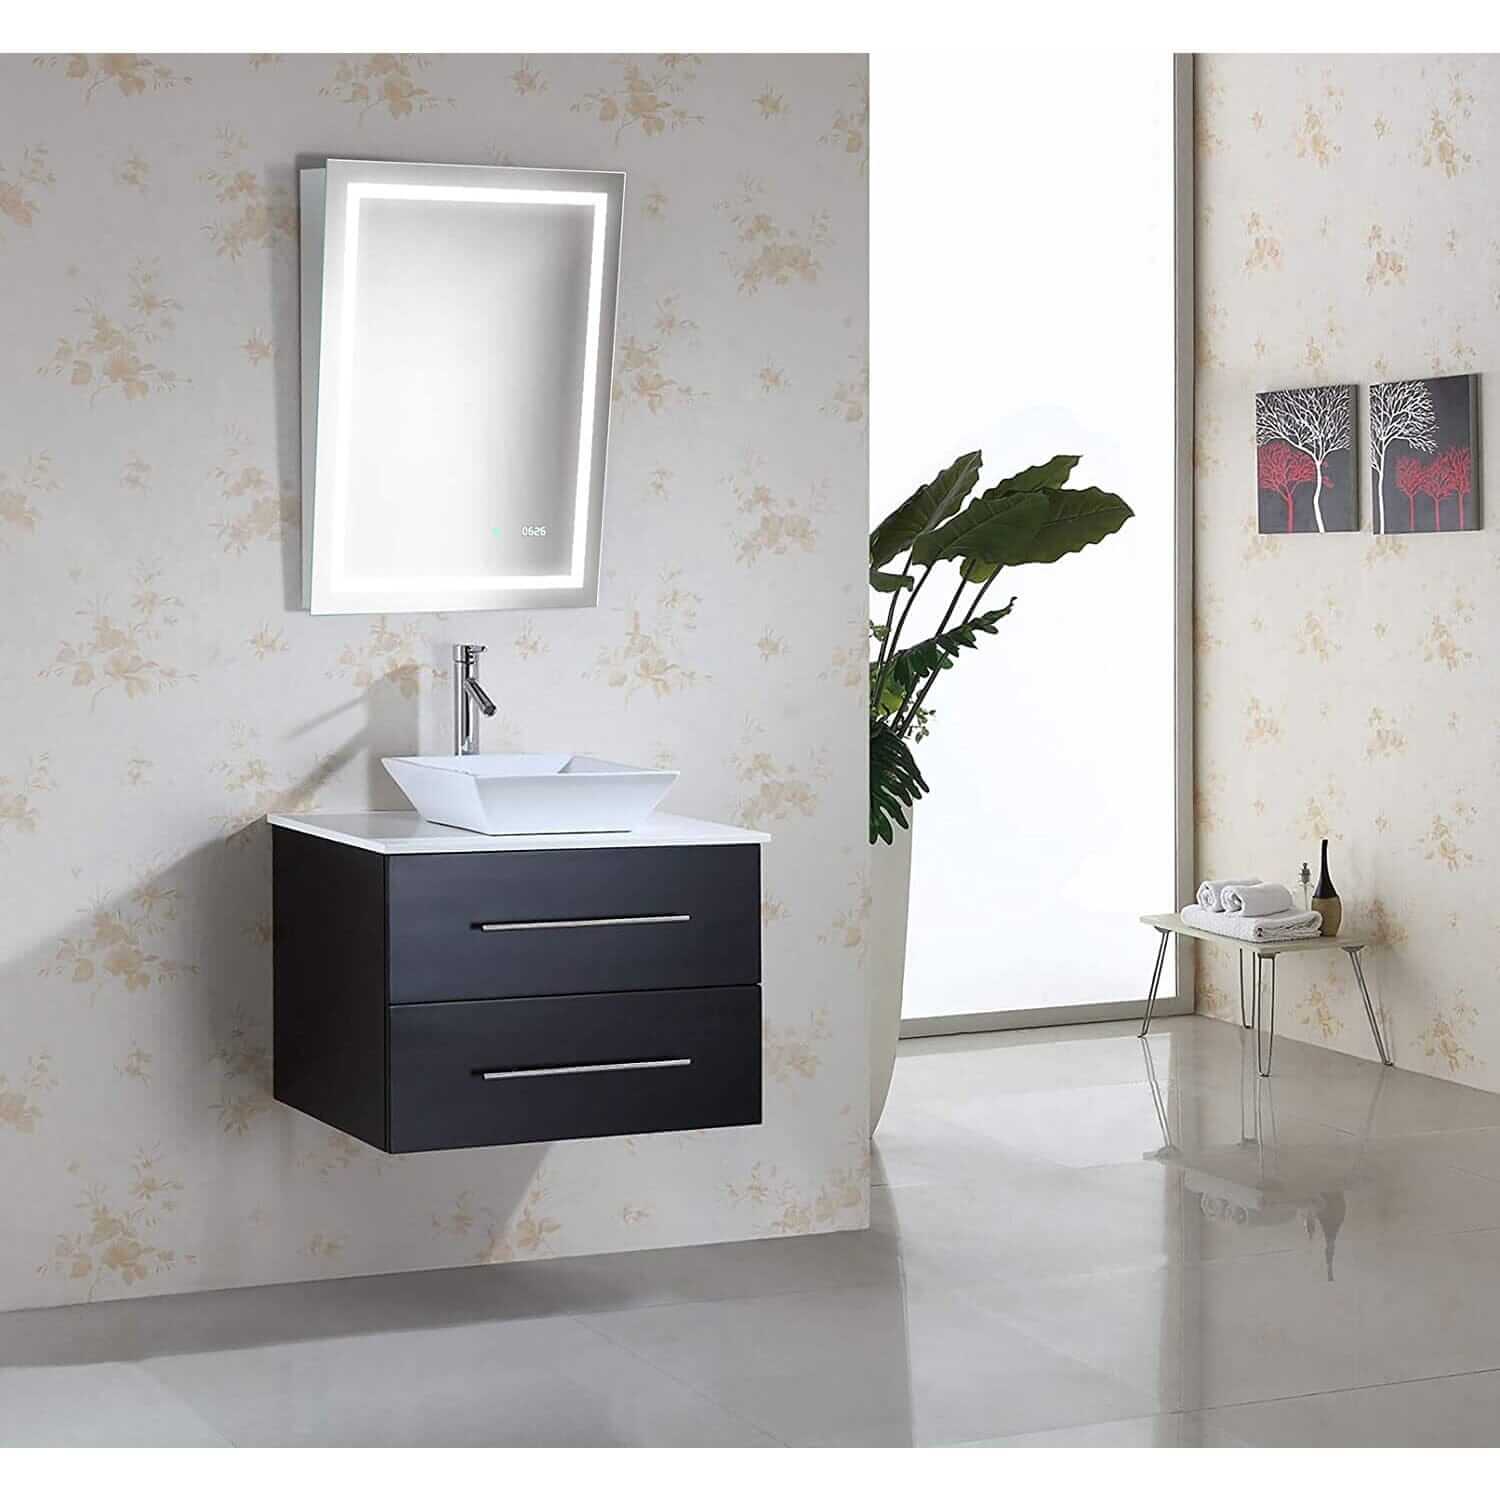 ADA Mirror - Krugg Icon Fixed Tilt Bathroom Mirror